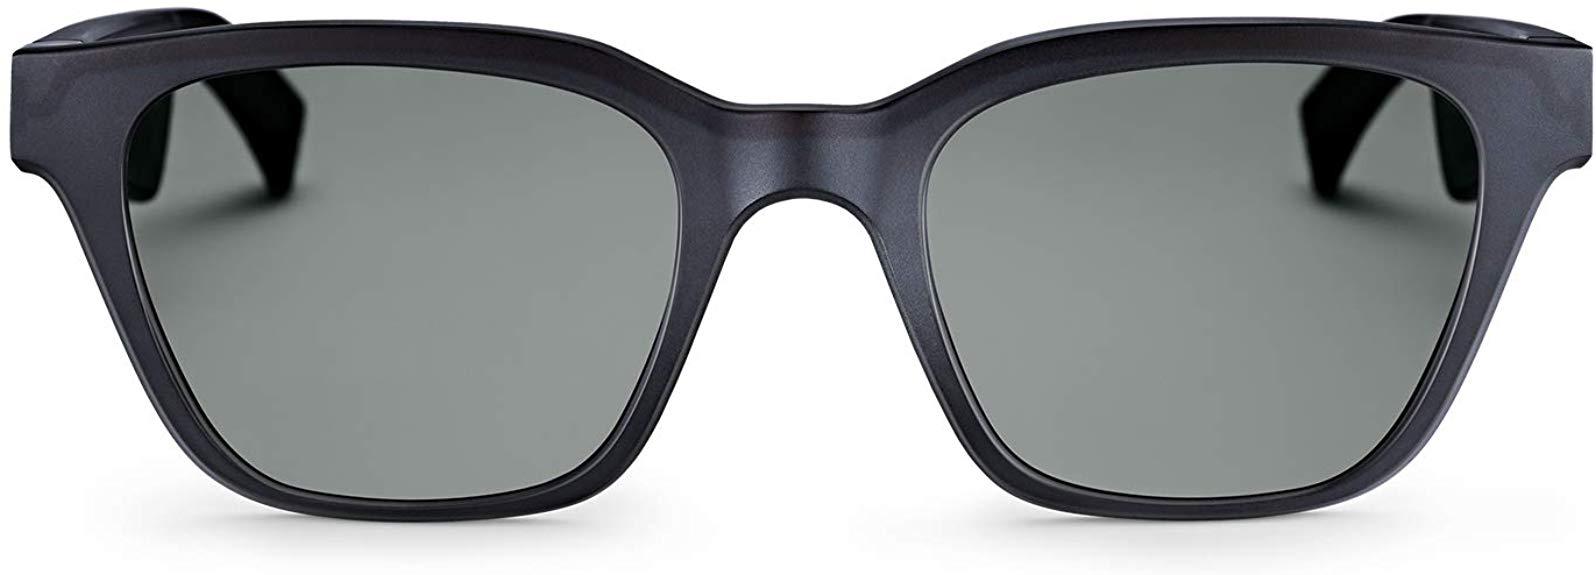 Bose Frames - Audio Sunglasses Google Assistant